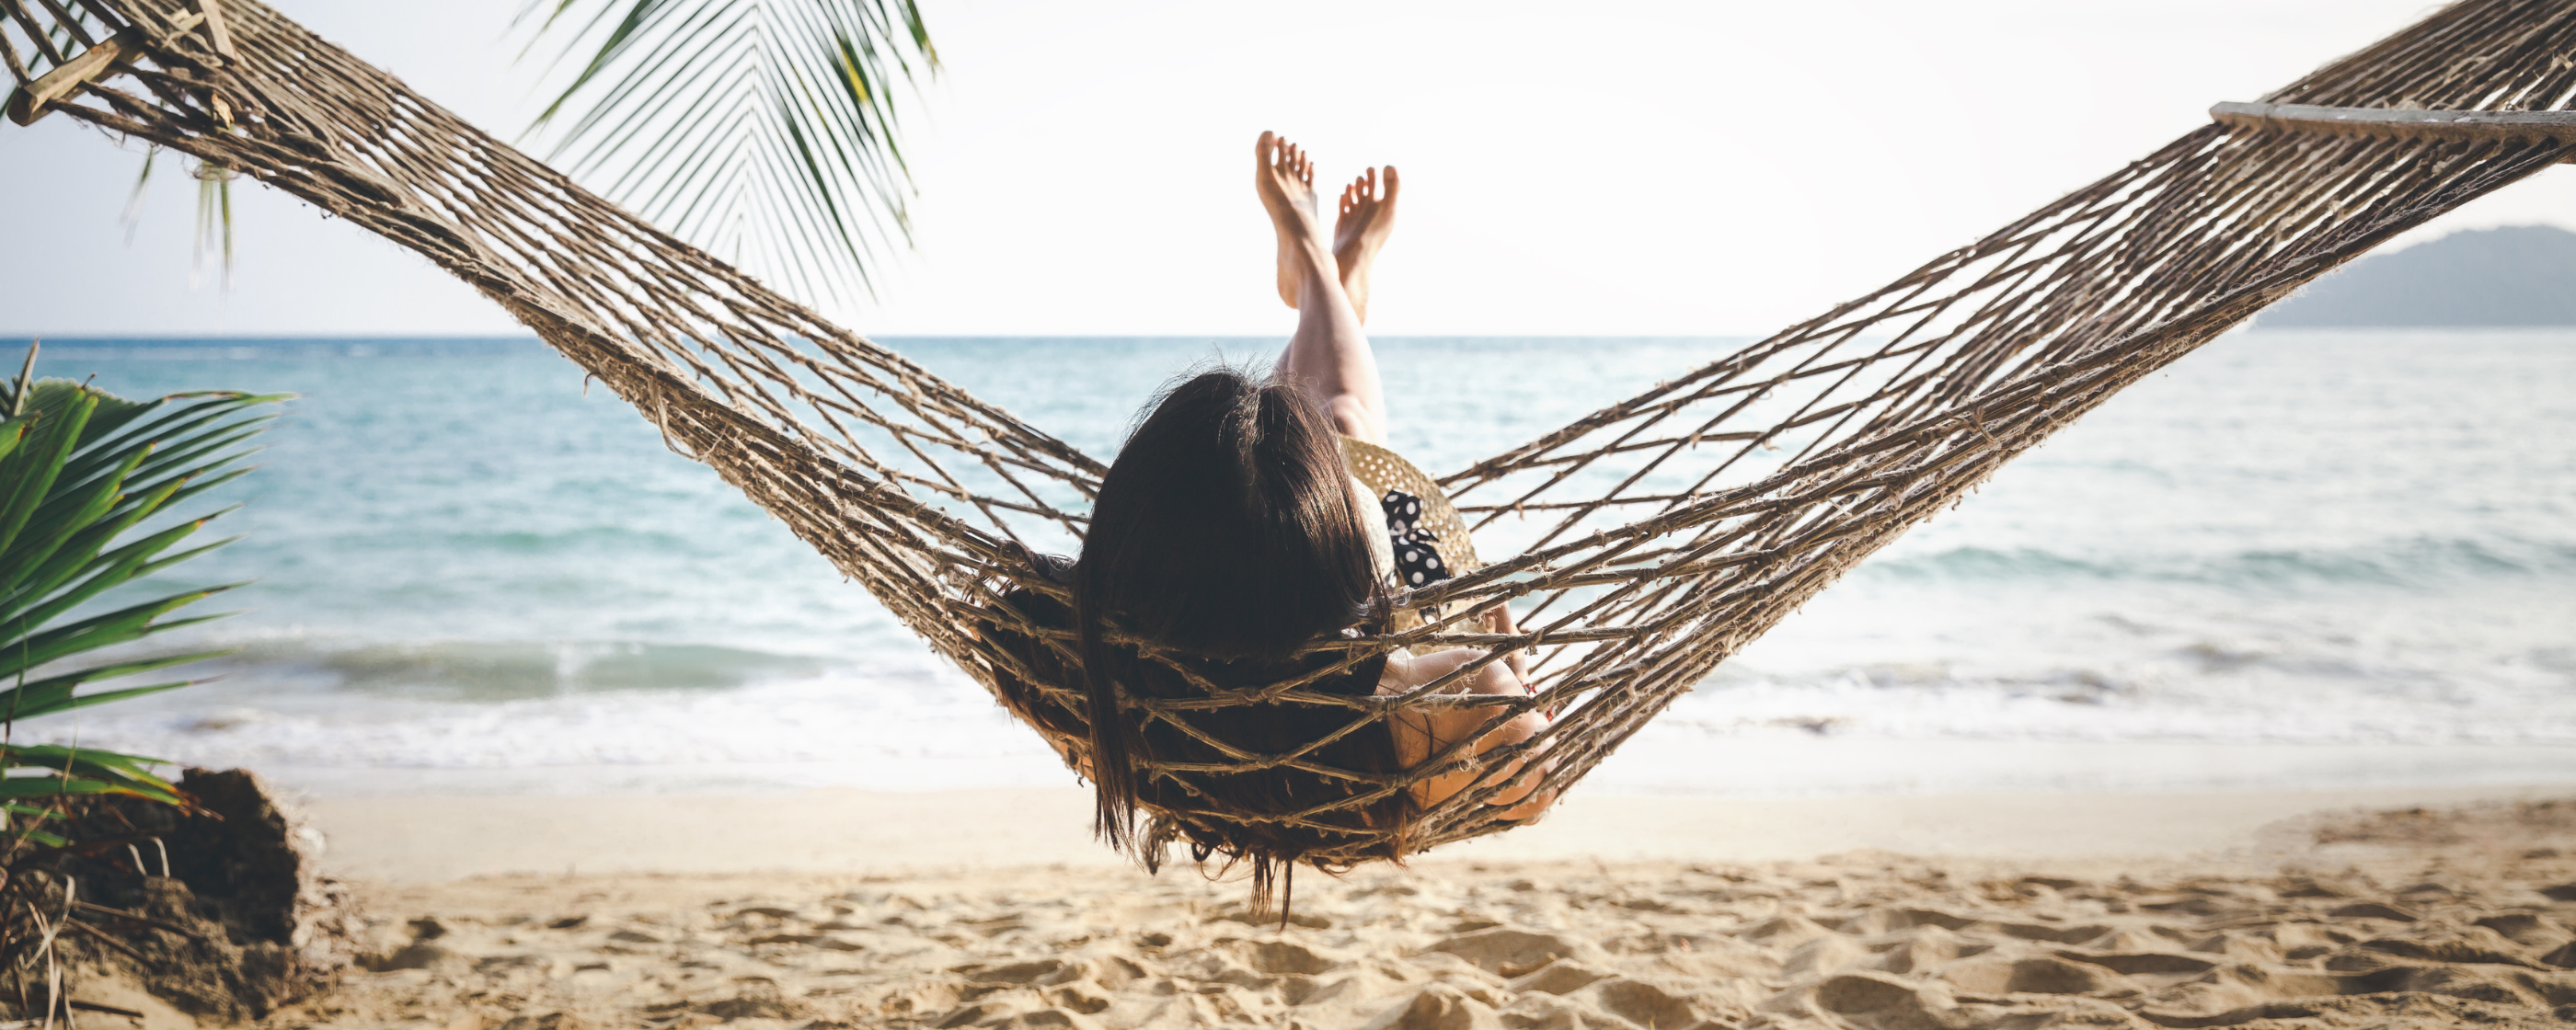 A woman with her feet up on a hammock on a beach.